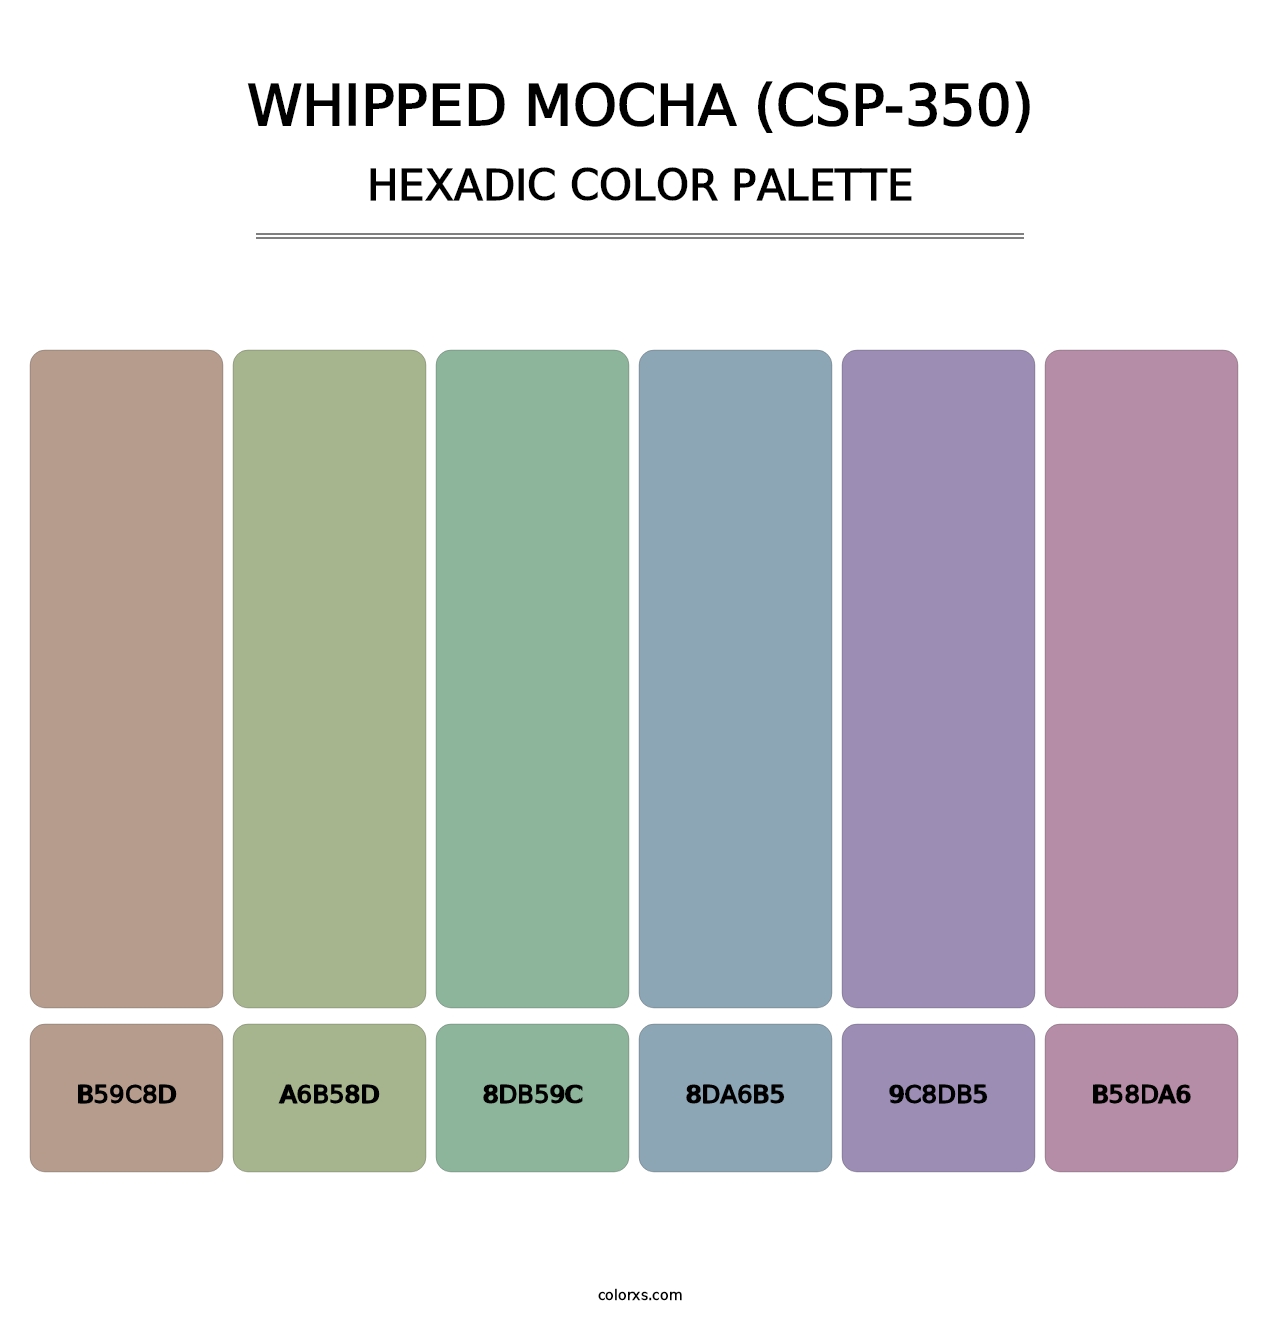 Whipped Mocha (CSP-350) - Hexadic Color Palette